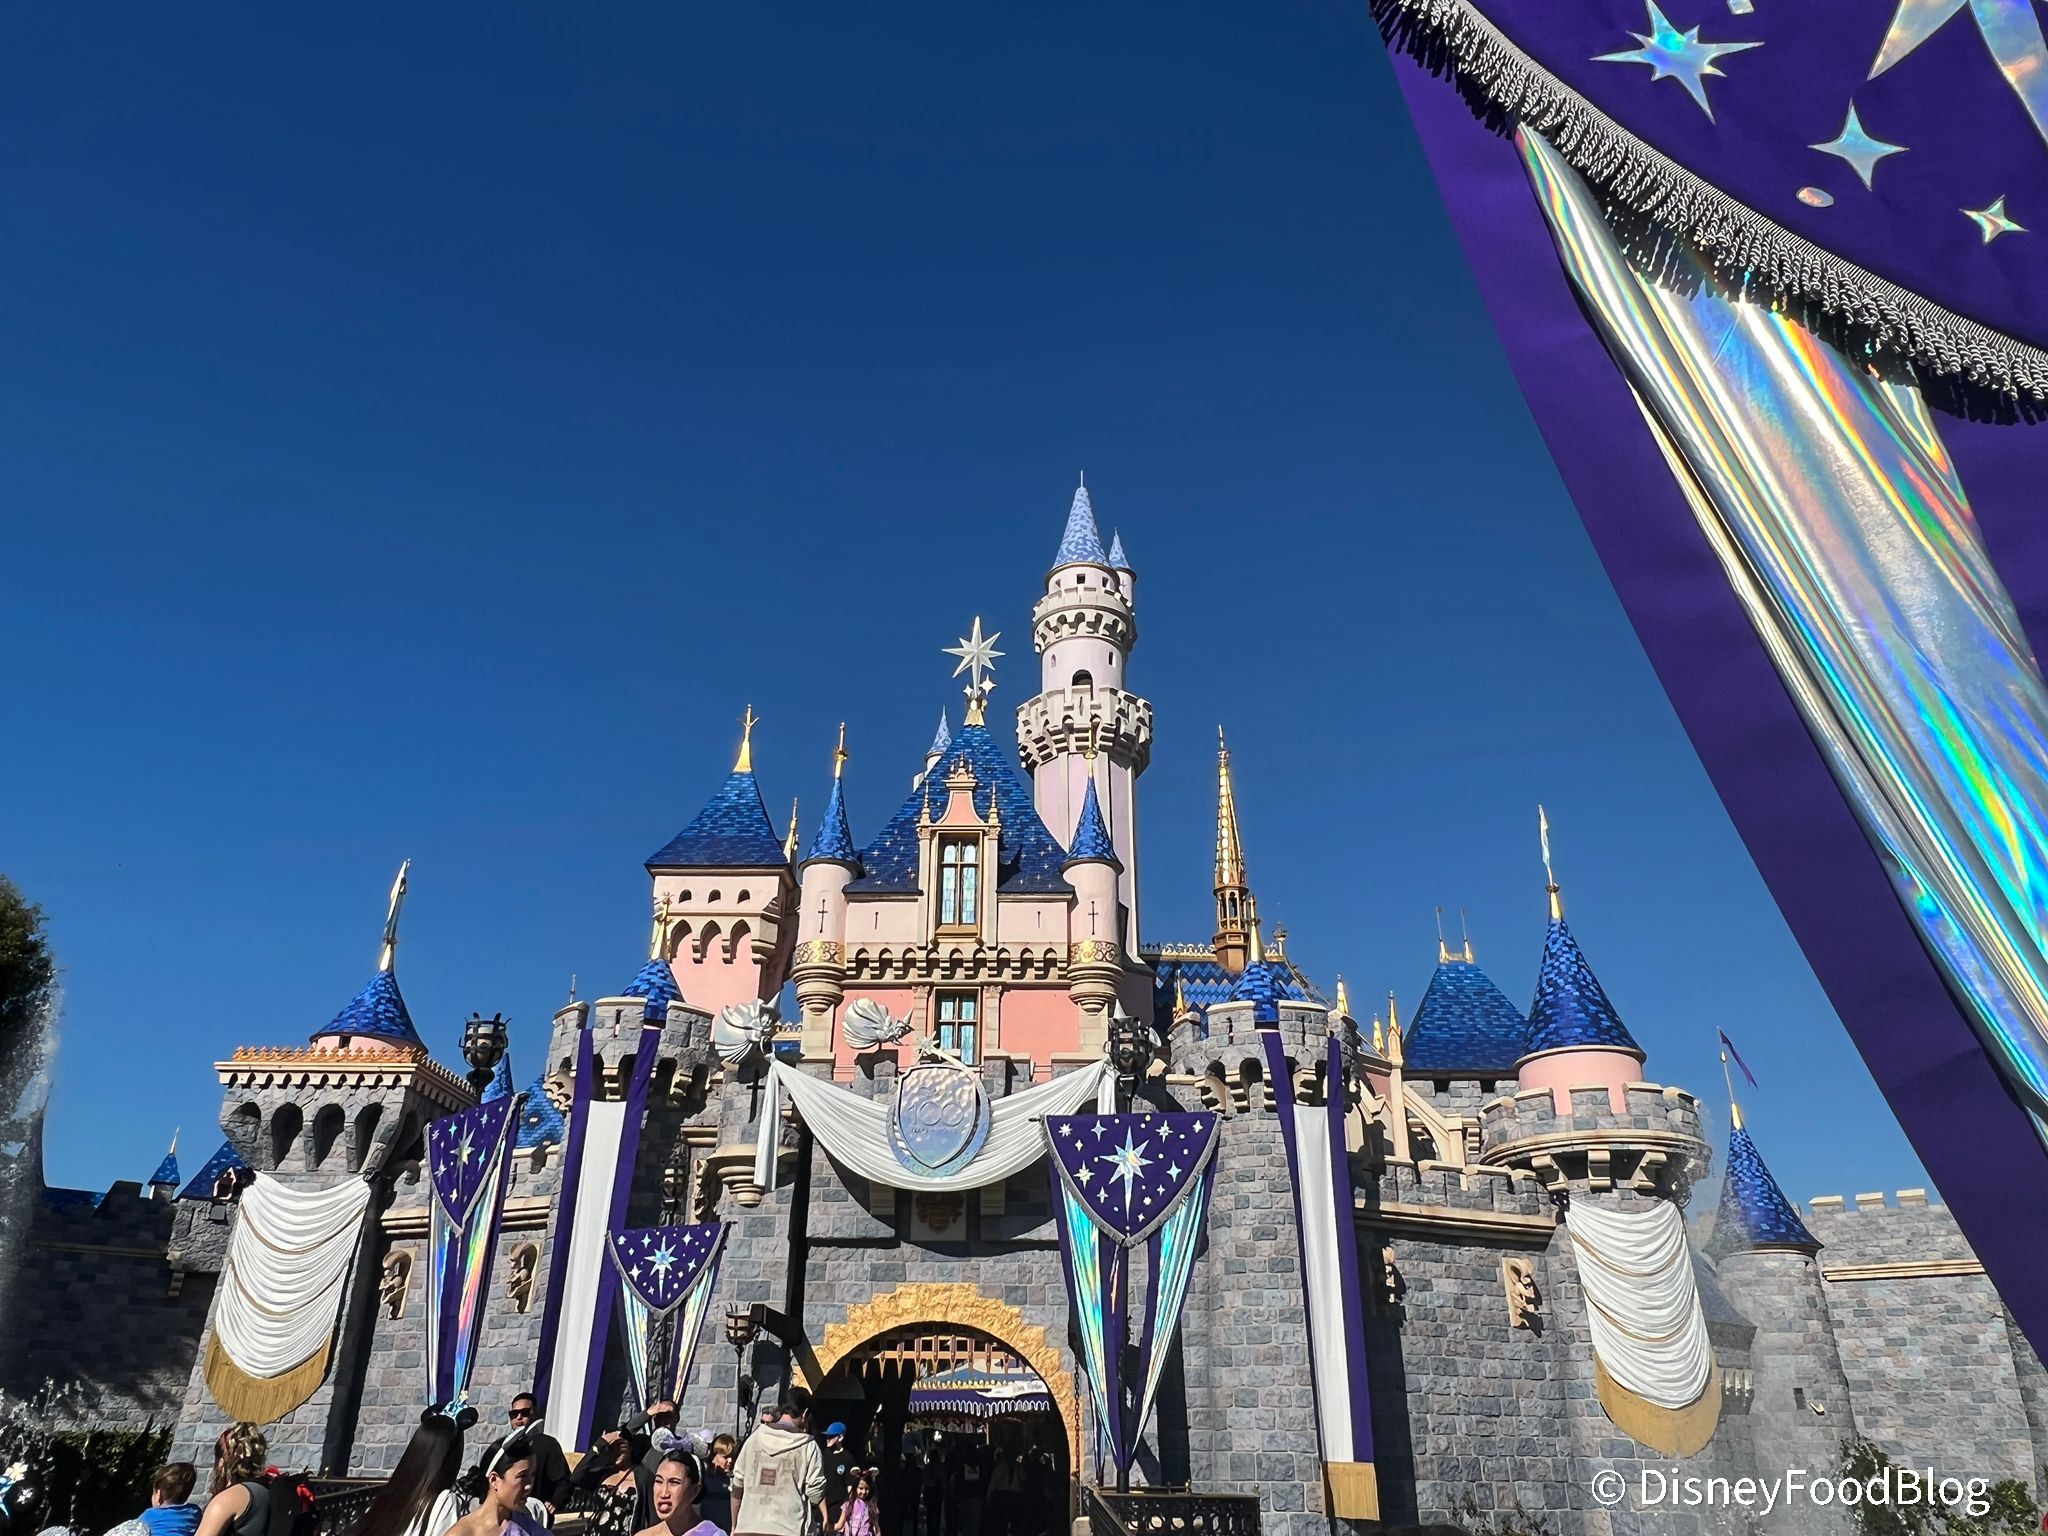 New 'Anastasia' Pin Arrives at Walt Disney World - WDW News Today